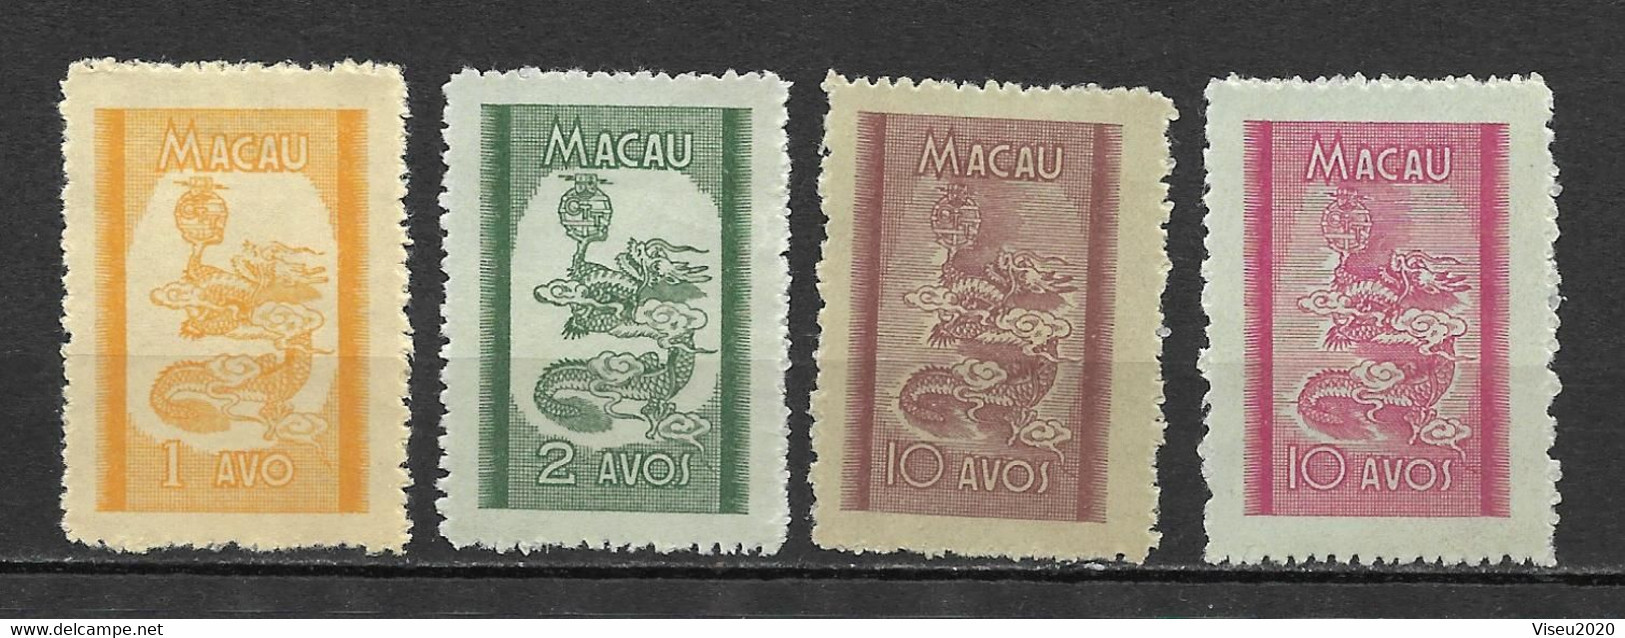 Portugal (Macau) 1950 – Dragões (Dragons) Emissão Local -  Complet Set Macao - Neufs